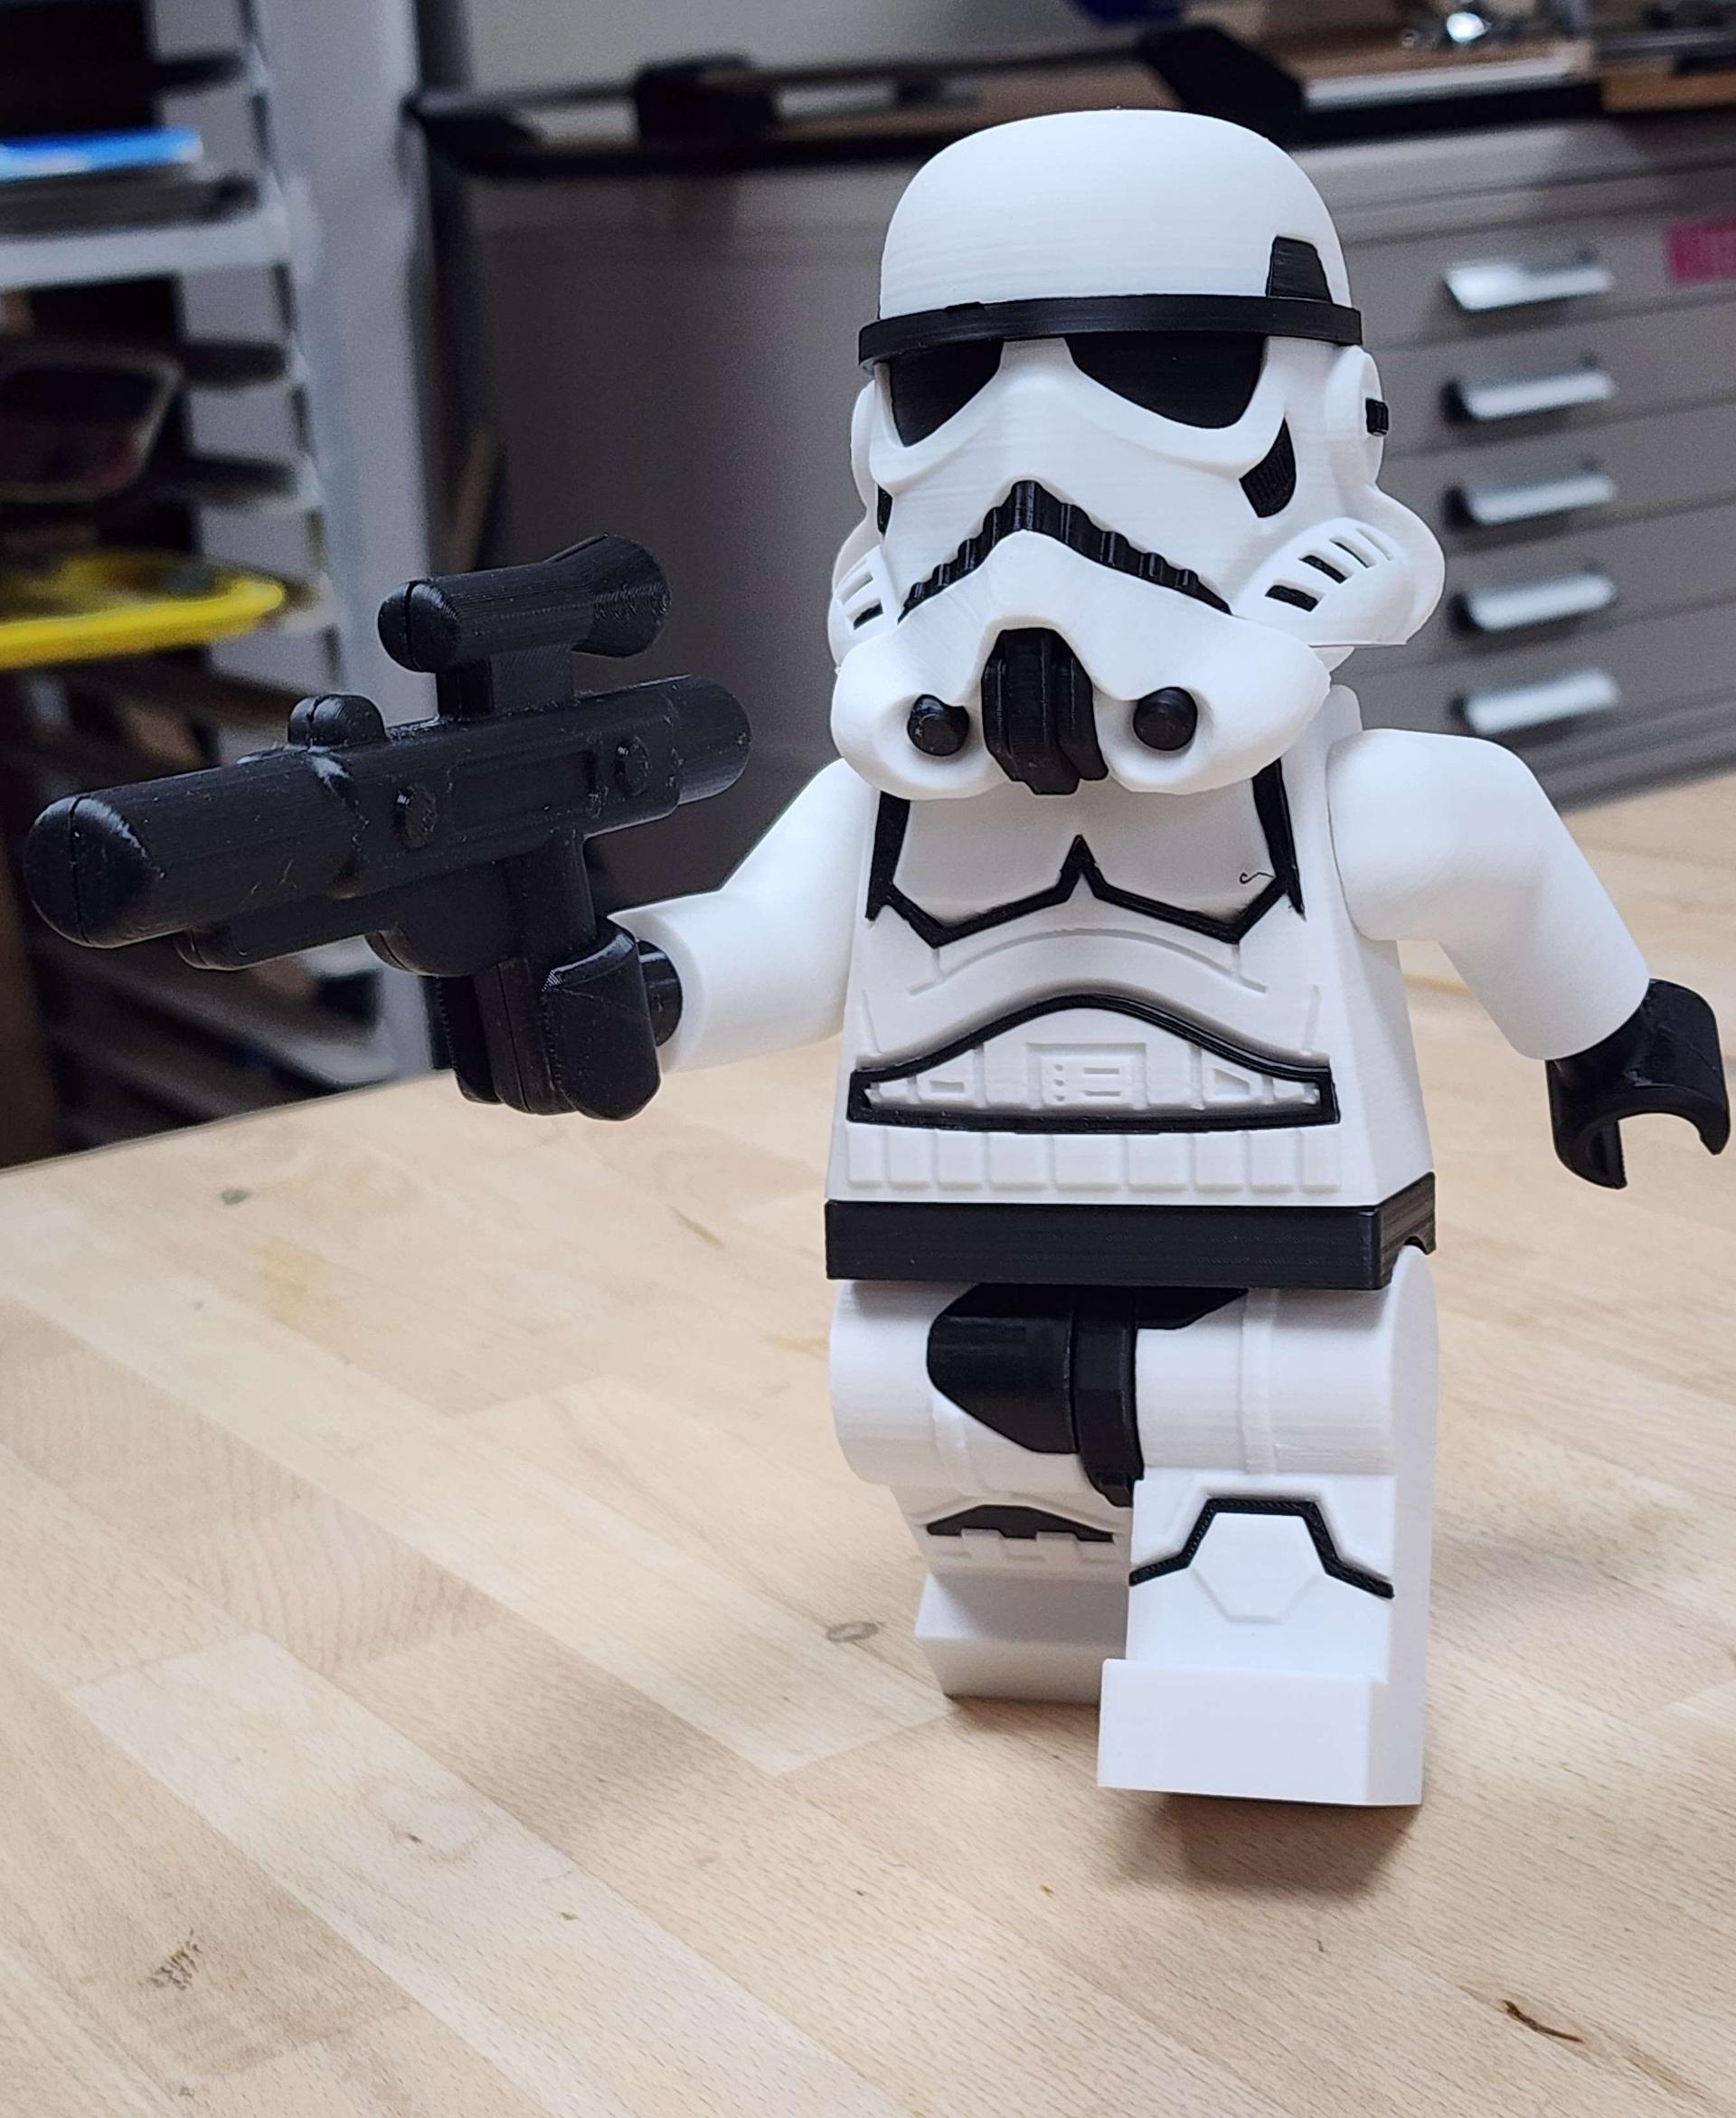 Stormtrooper (6:1 LEGO-inspired brick figure, NO MMU/AMS, NO supports, NO glue) - Action shot - 3d model